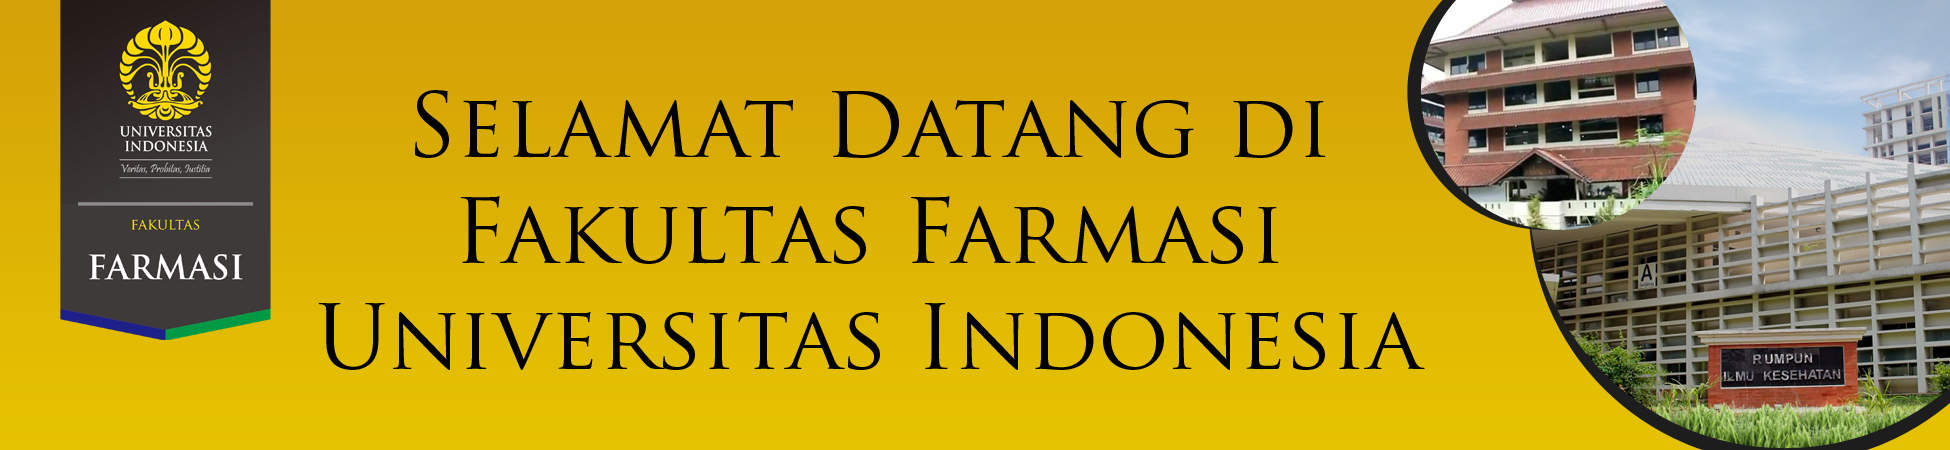 Home Fakultas Farmasi Universitas Indonesia